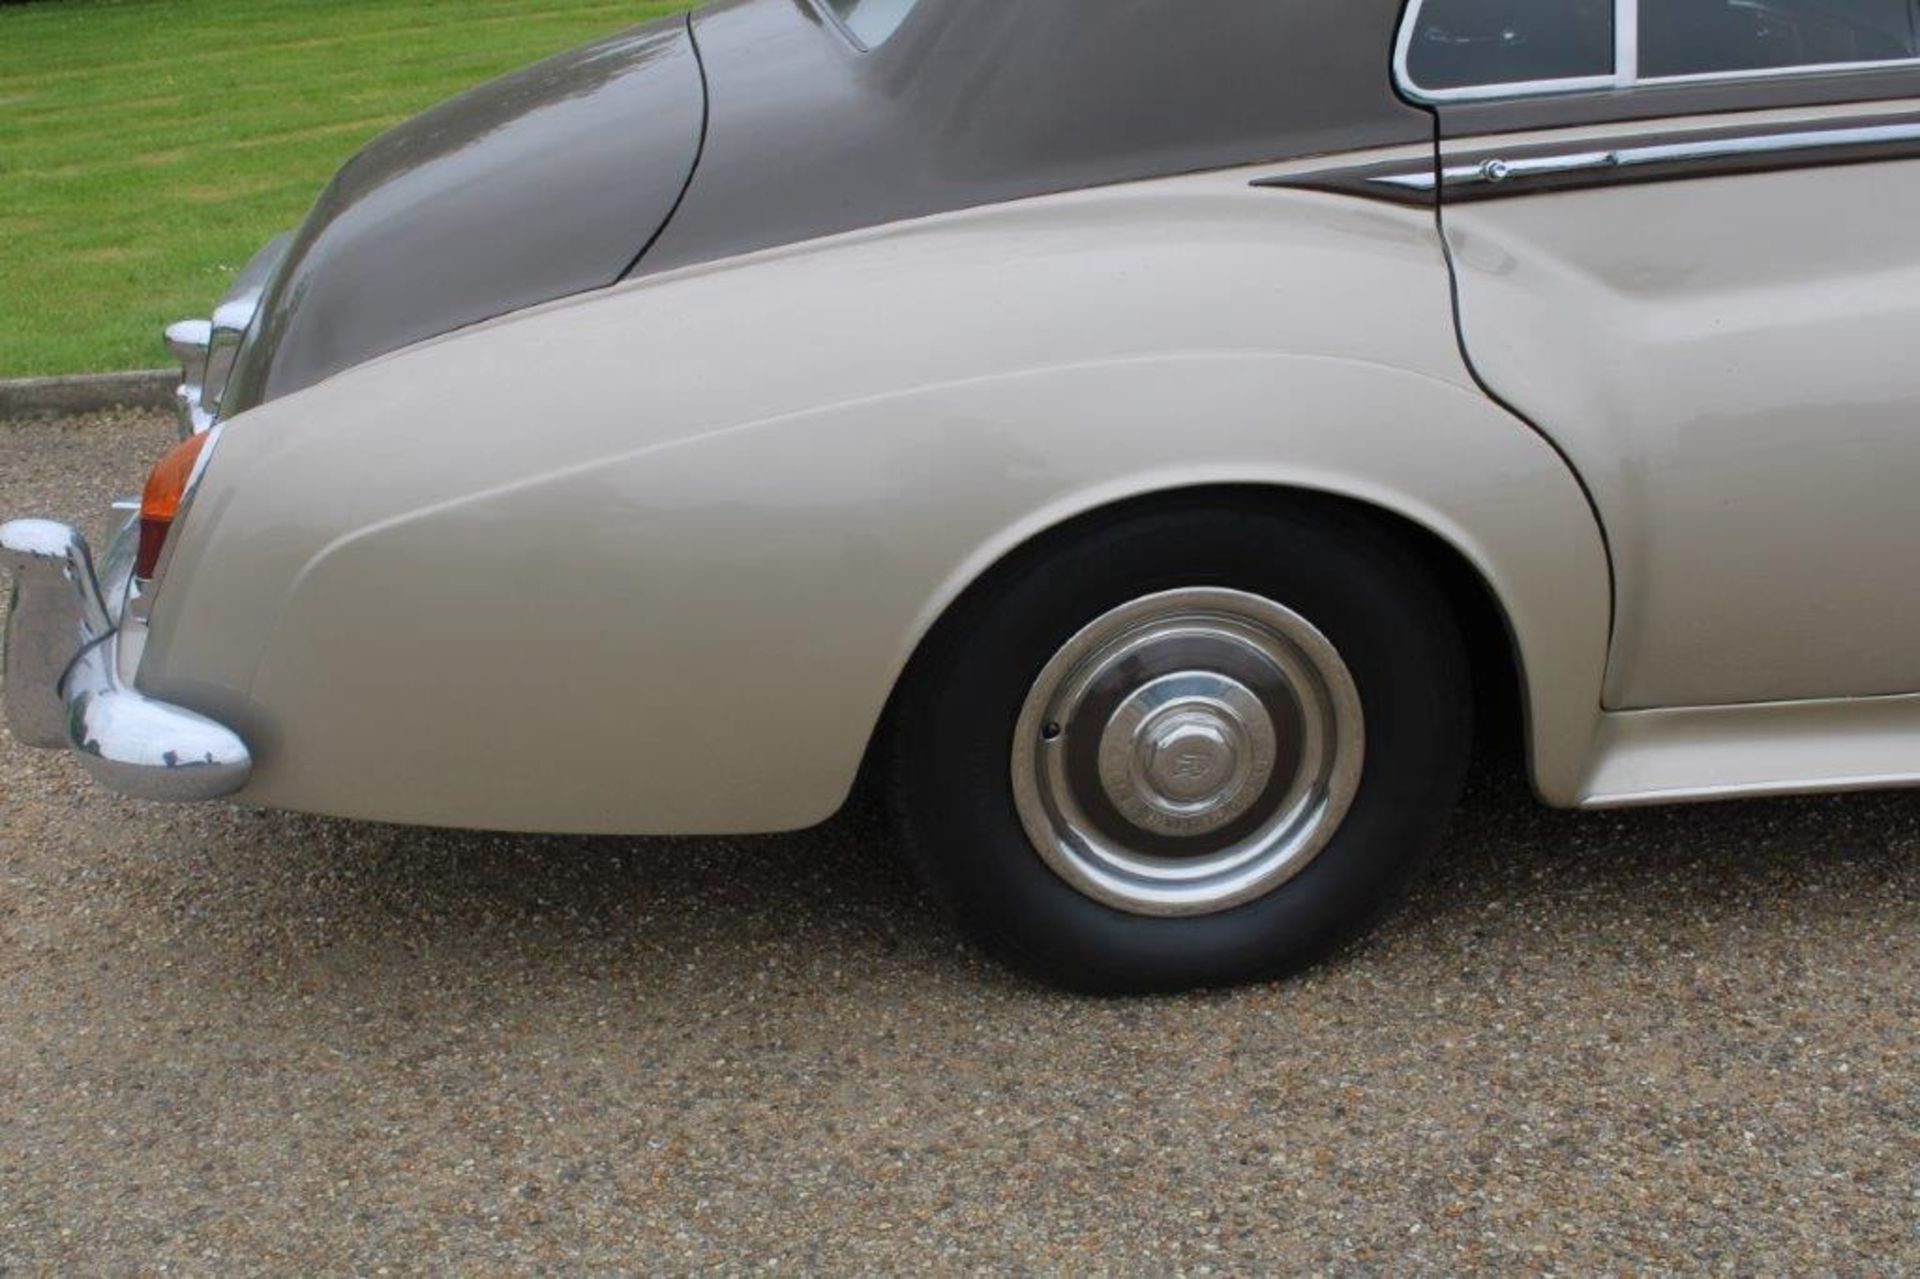 1959 Rolls Royce Silver Cloud I - Image 9 of 25